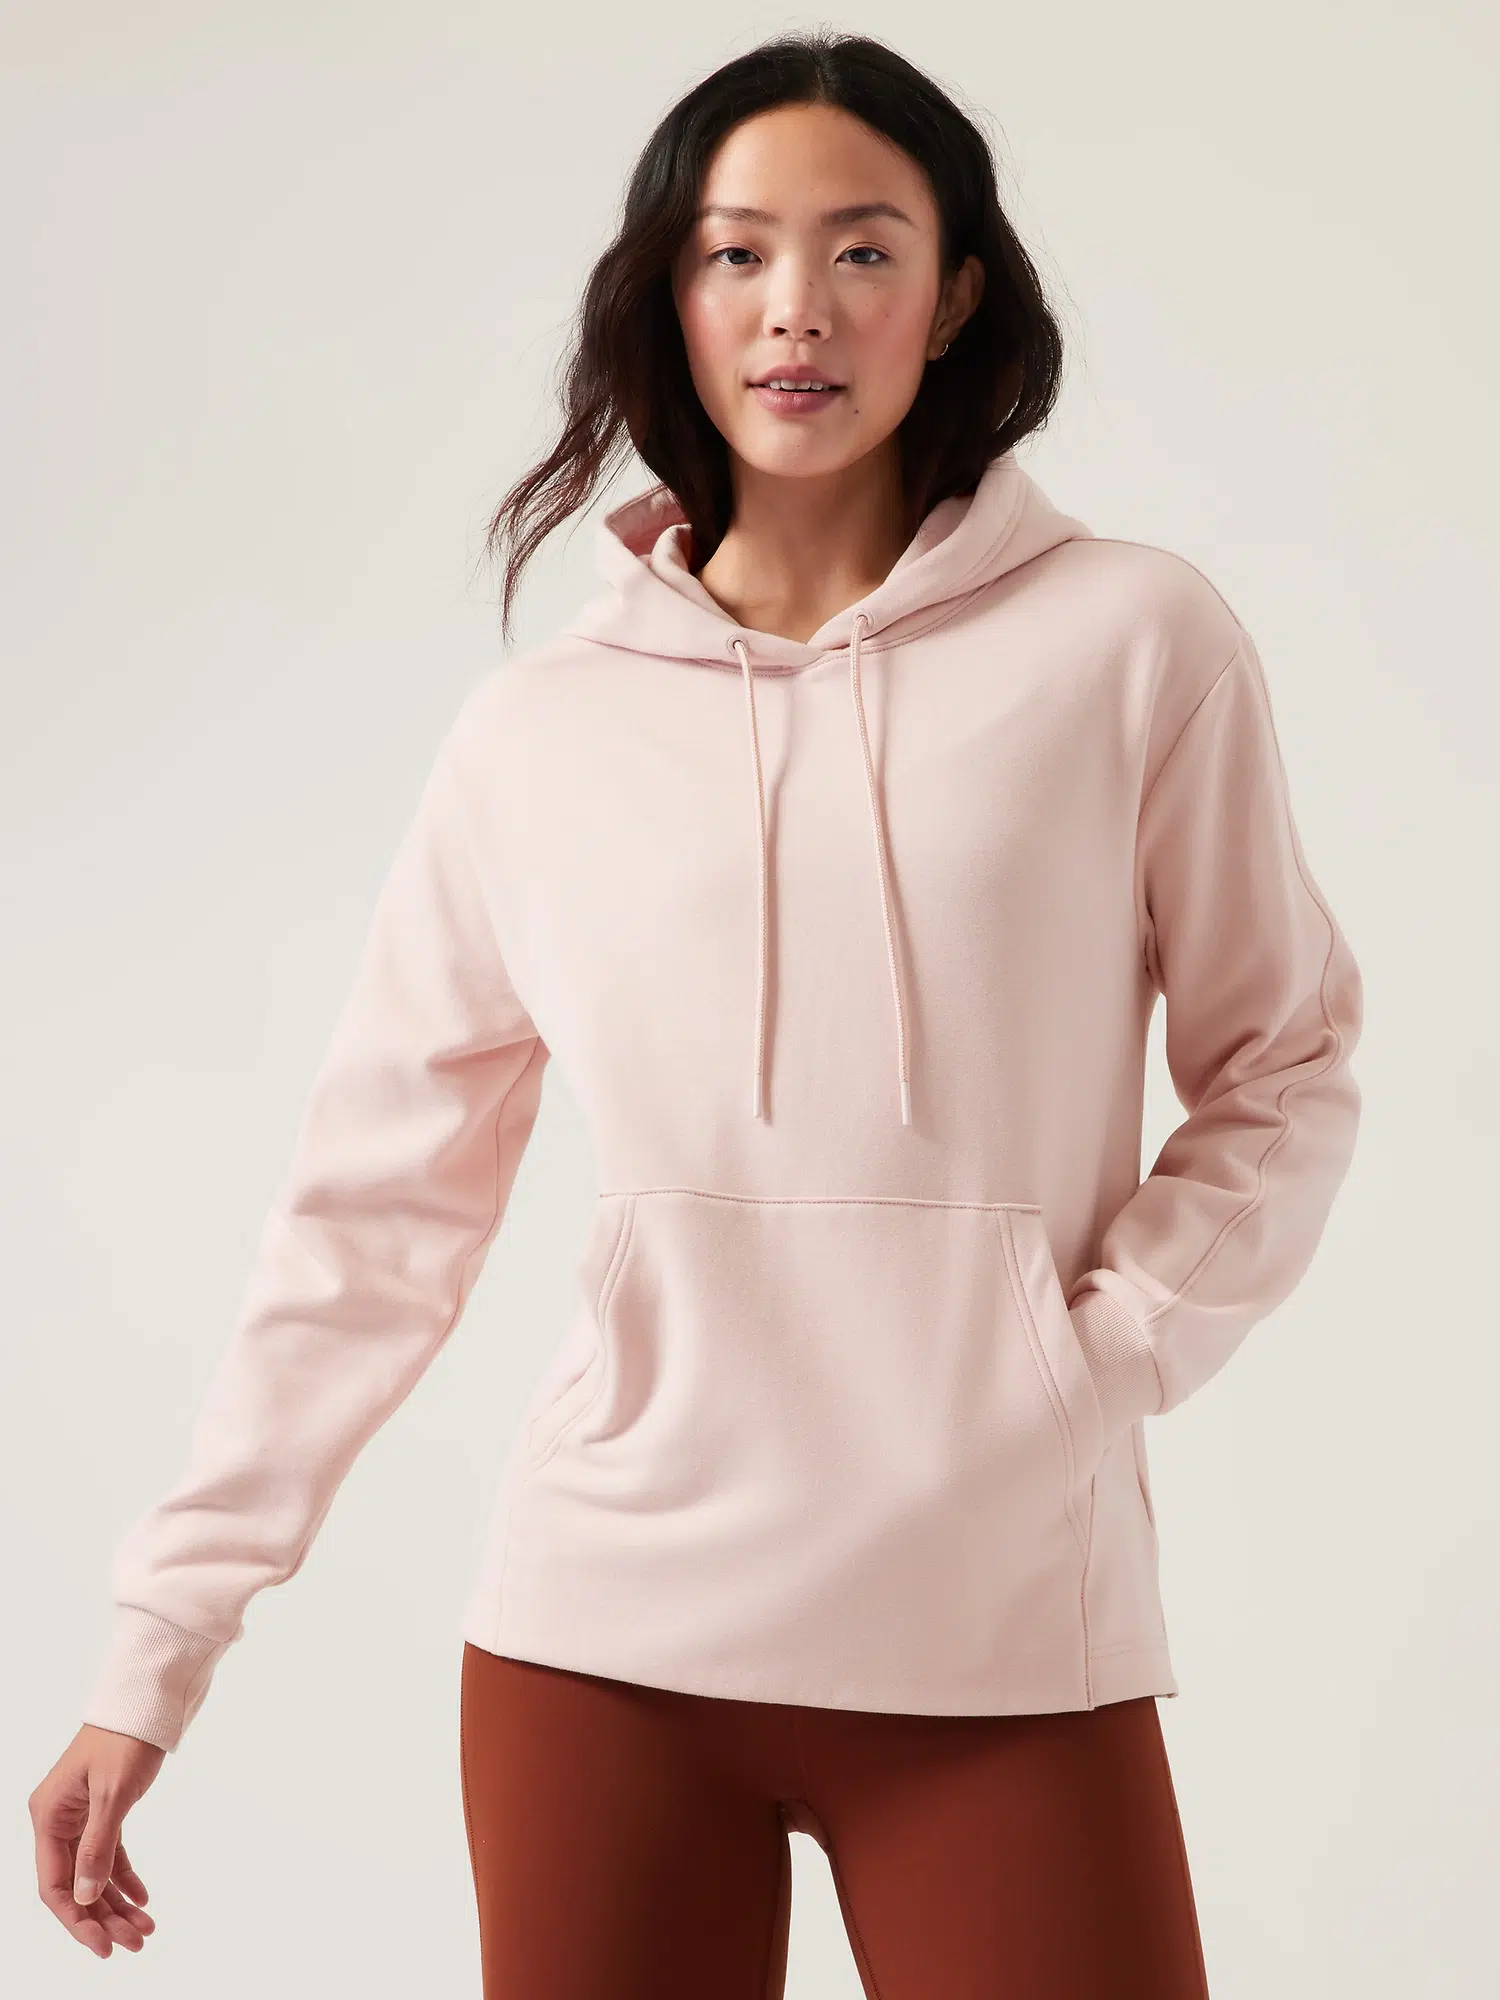 Honeydew Enti Clothing Athleta Womens Sweatshirts Pink Size Small Medi -  Shop Linda's Stuff